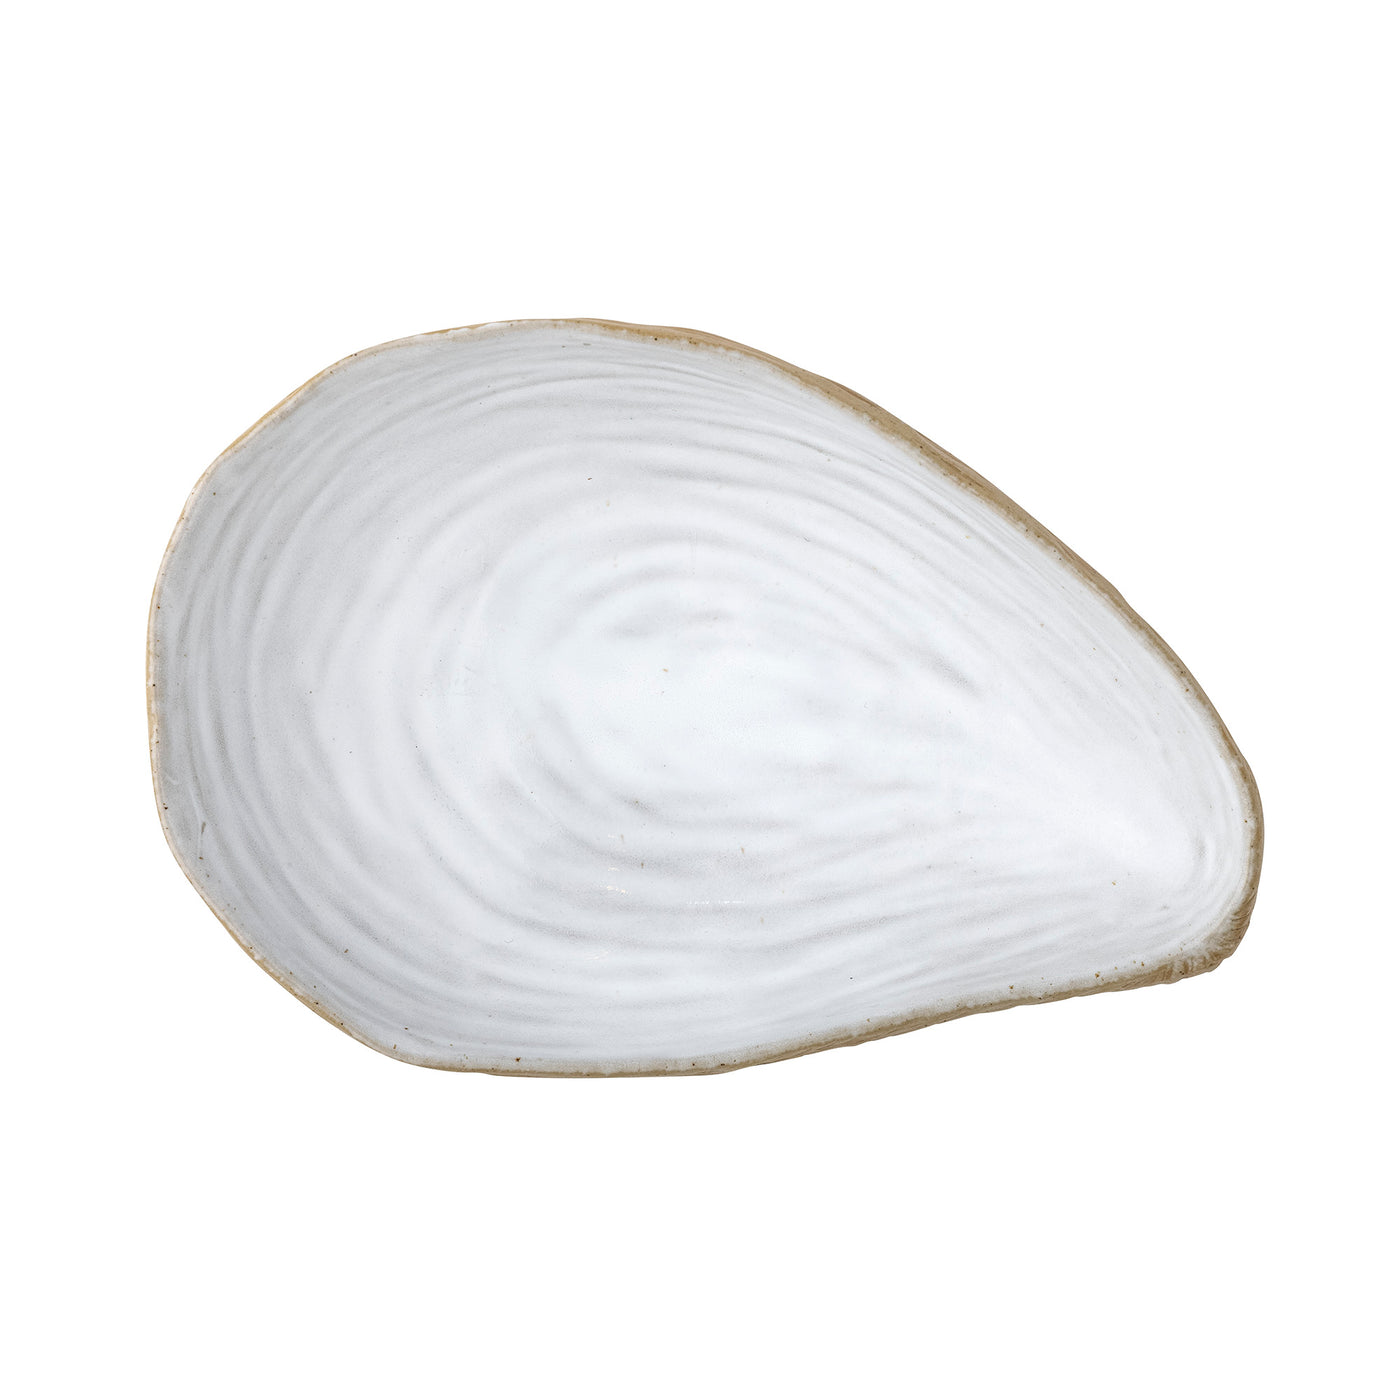 Seashell dish